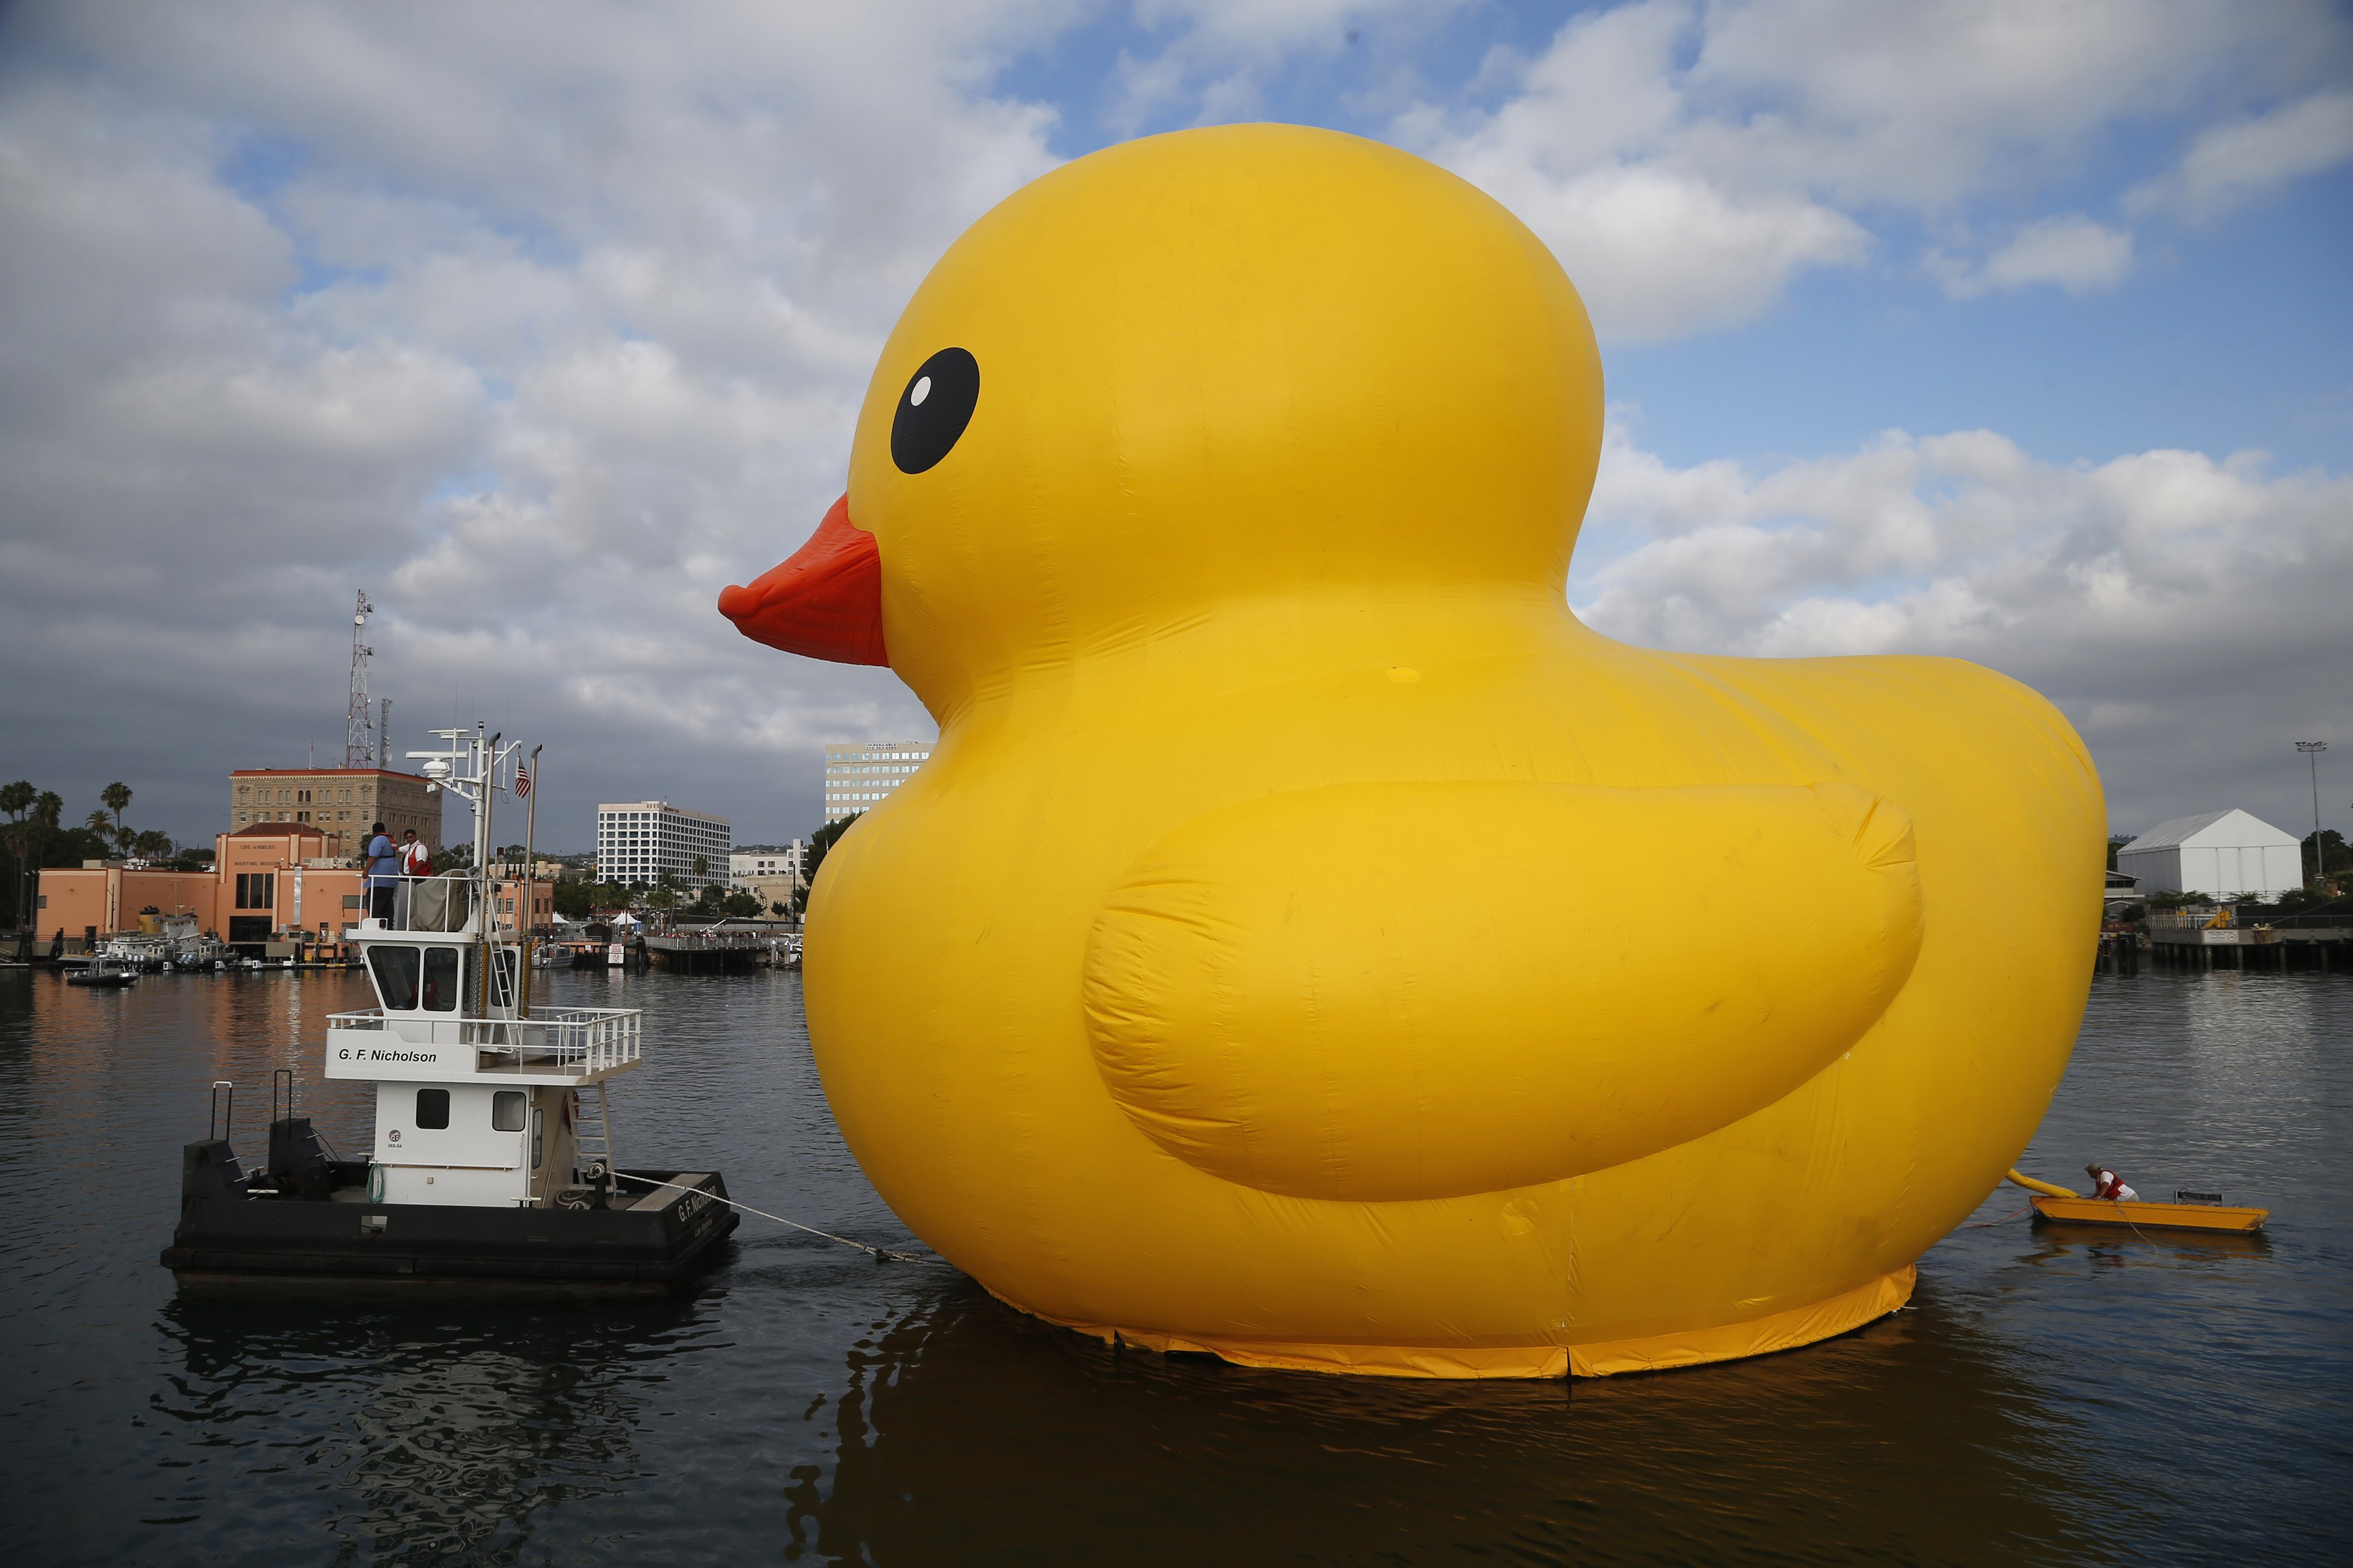 Giant Inflatable Rubber Duck Installation By Dutch Artist Florentijn Hofman Floats Through The